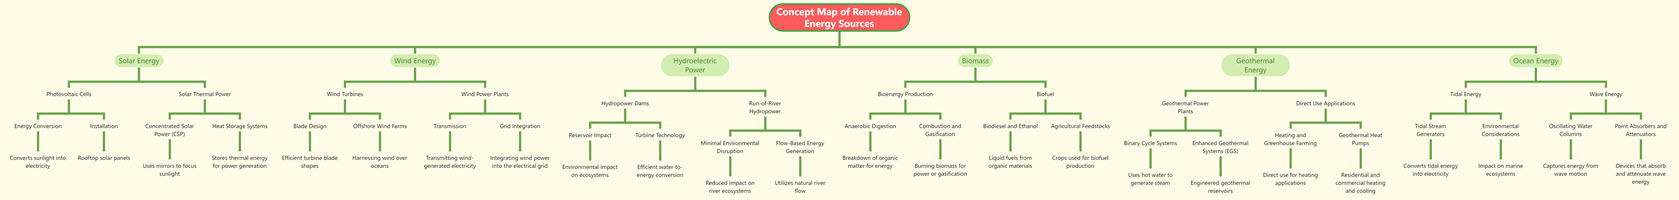 Concept Map of Renewable Energy Sources